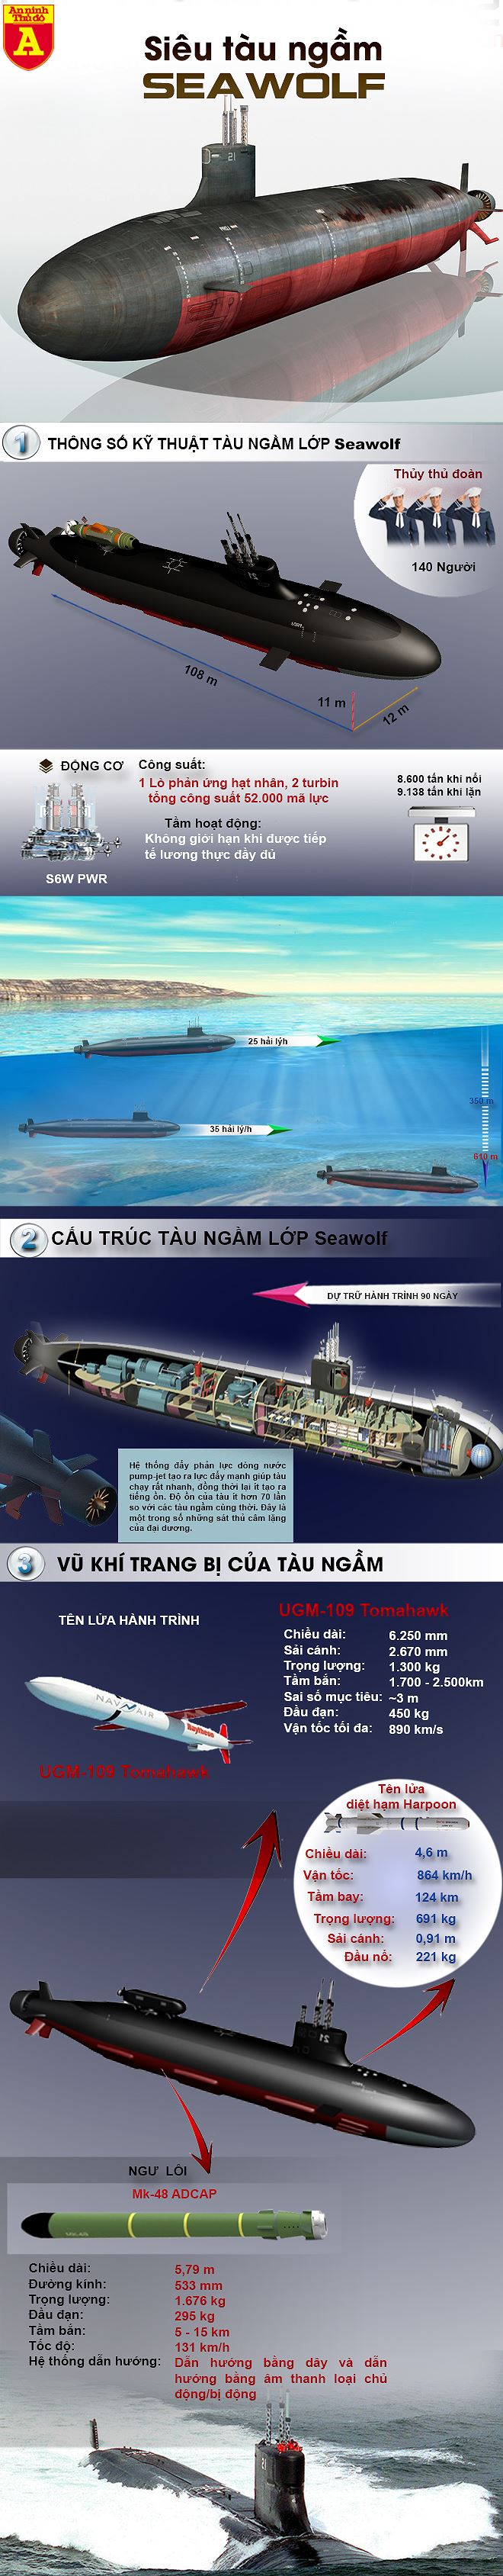 infographic seawolf con ac mong cua tau ngam hat nhan nga duoi dai duong